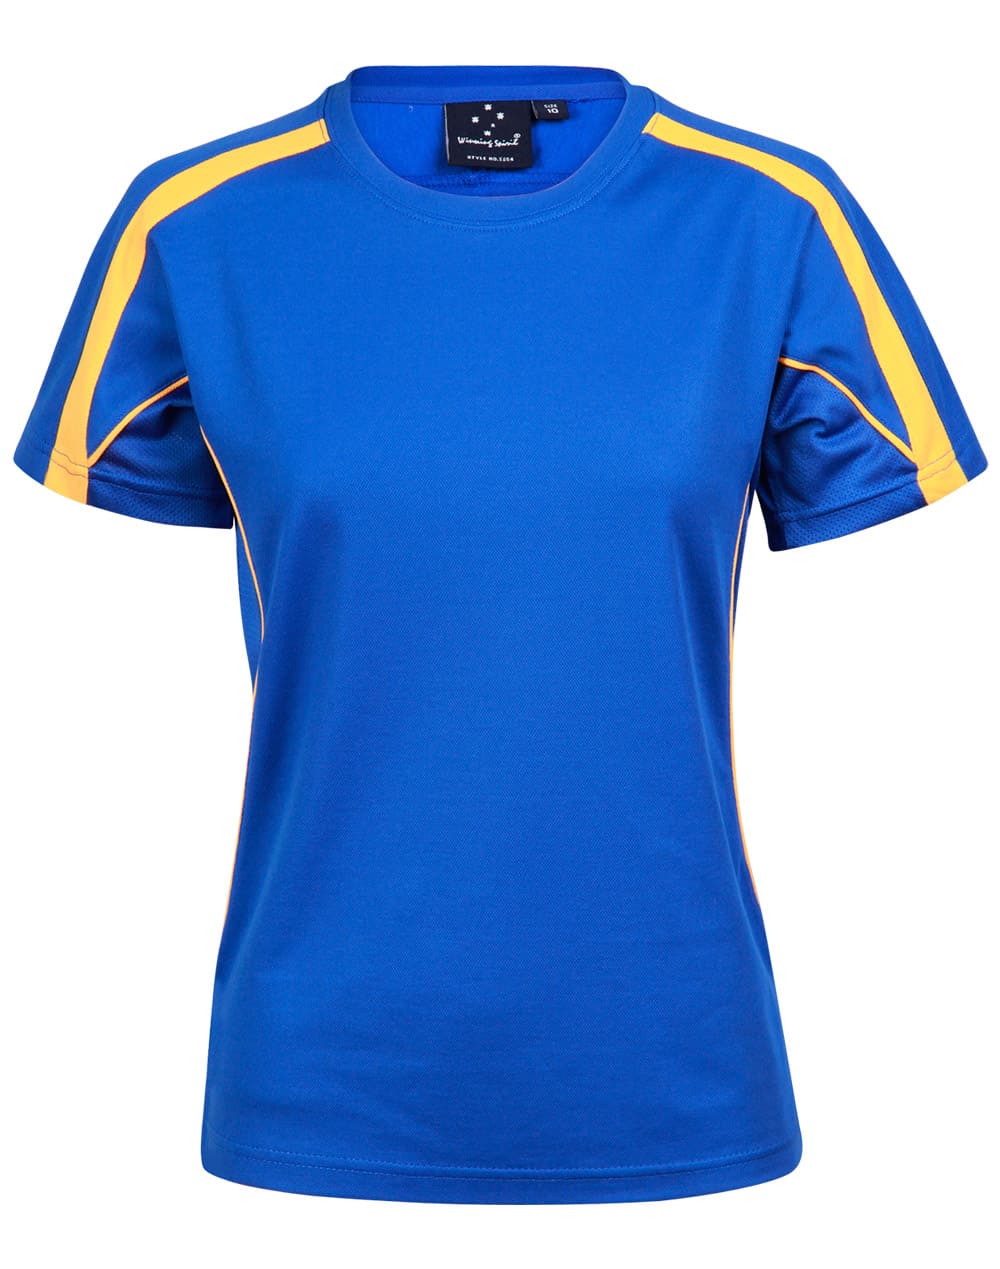 Custom (Navy Aqua Blue) Legend Ladies Short Sleeve Tee Shirts Online in Perth